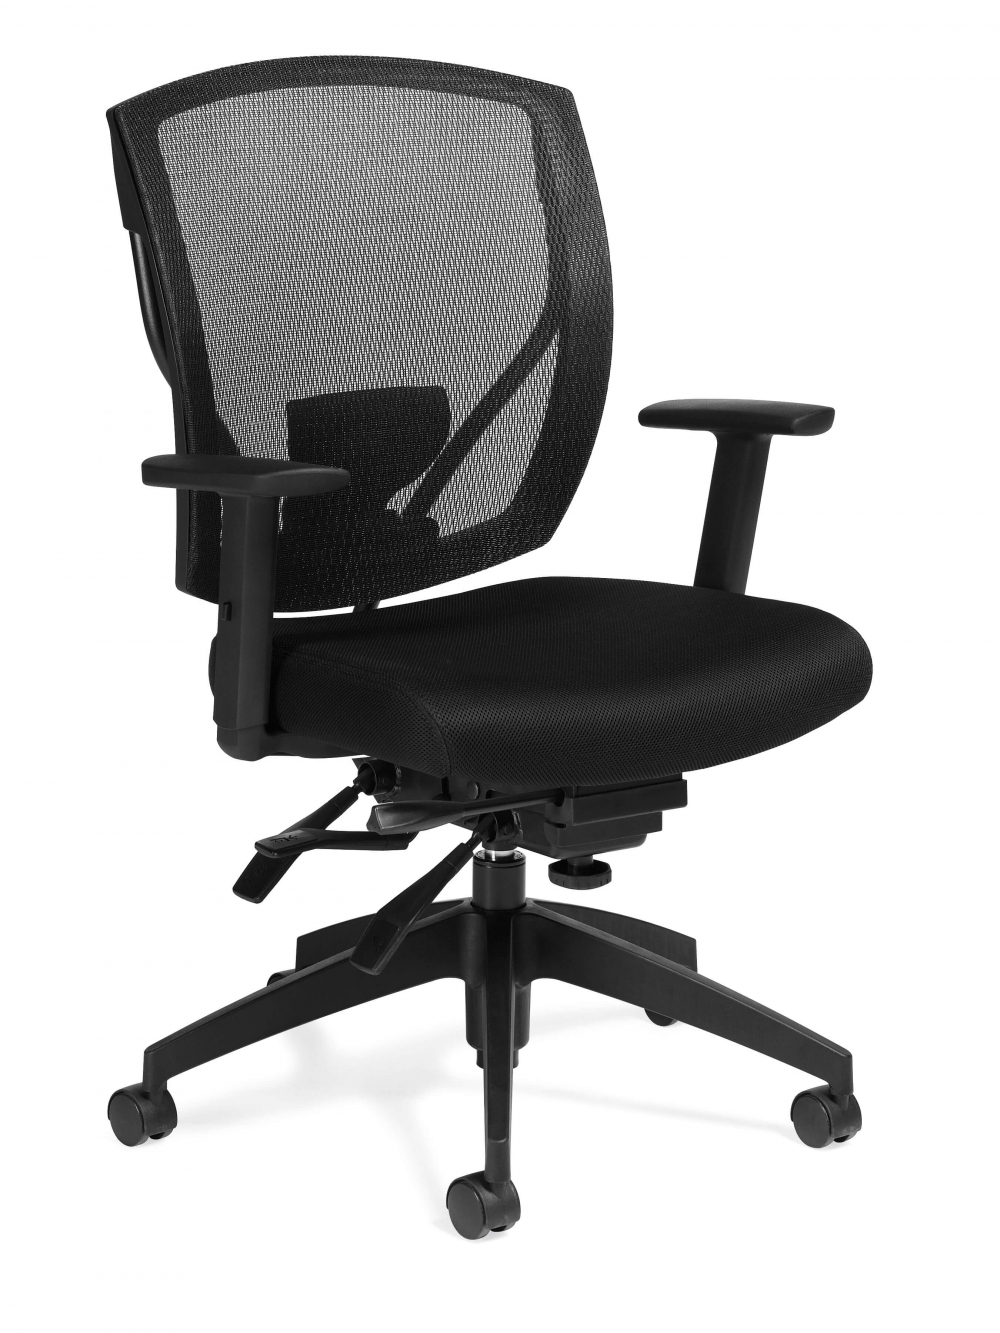 office-furniture-chairs-mesh-chair.jpg